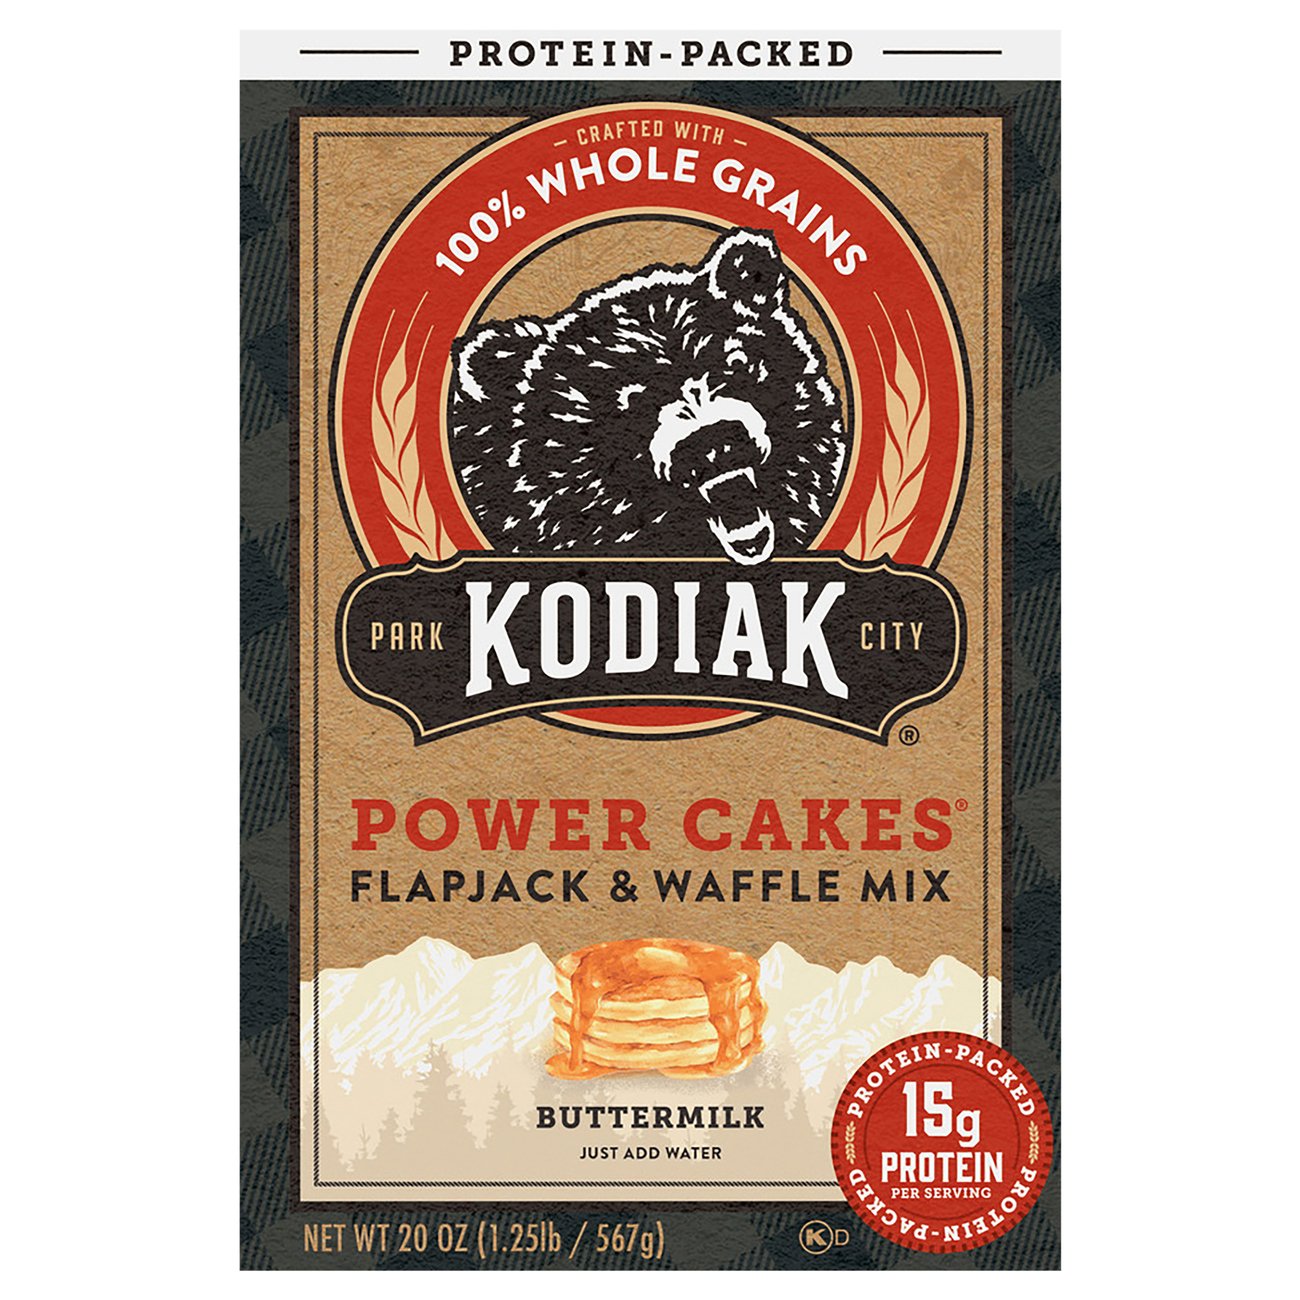 Kodiak Cakes Whole Grain Buttermilk Power Cakes - Shop Cereal & Breakfast  at H-E-B